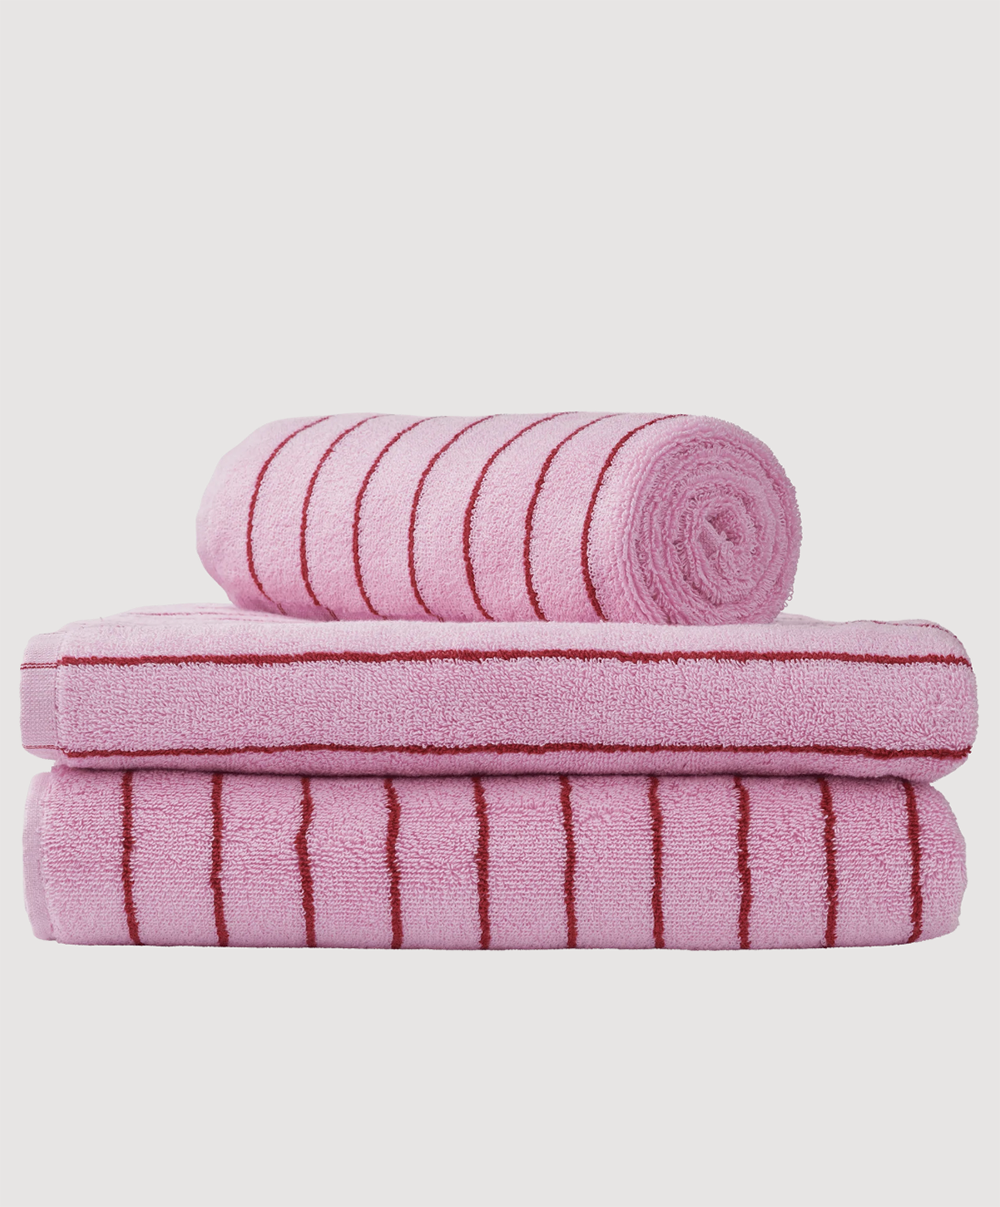 Bongusta - Naram Towel (Baby pink & Ski patrol)